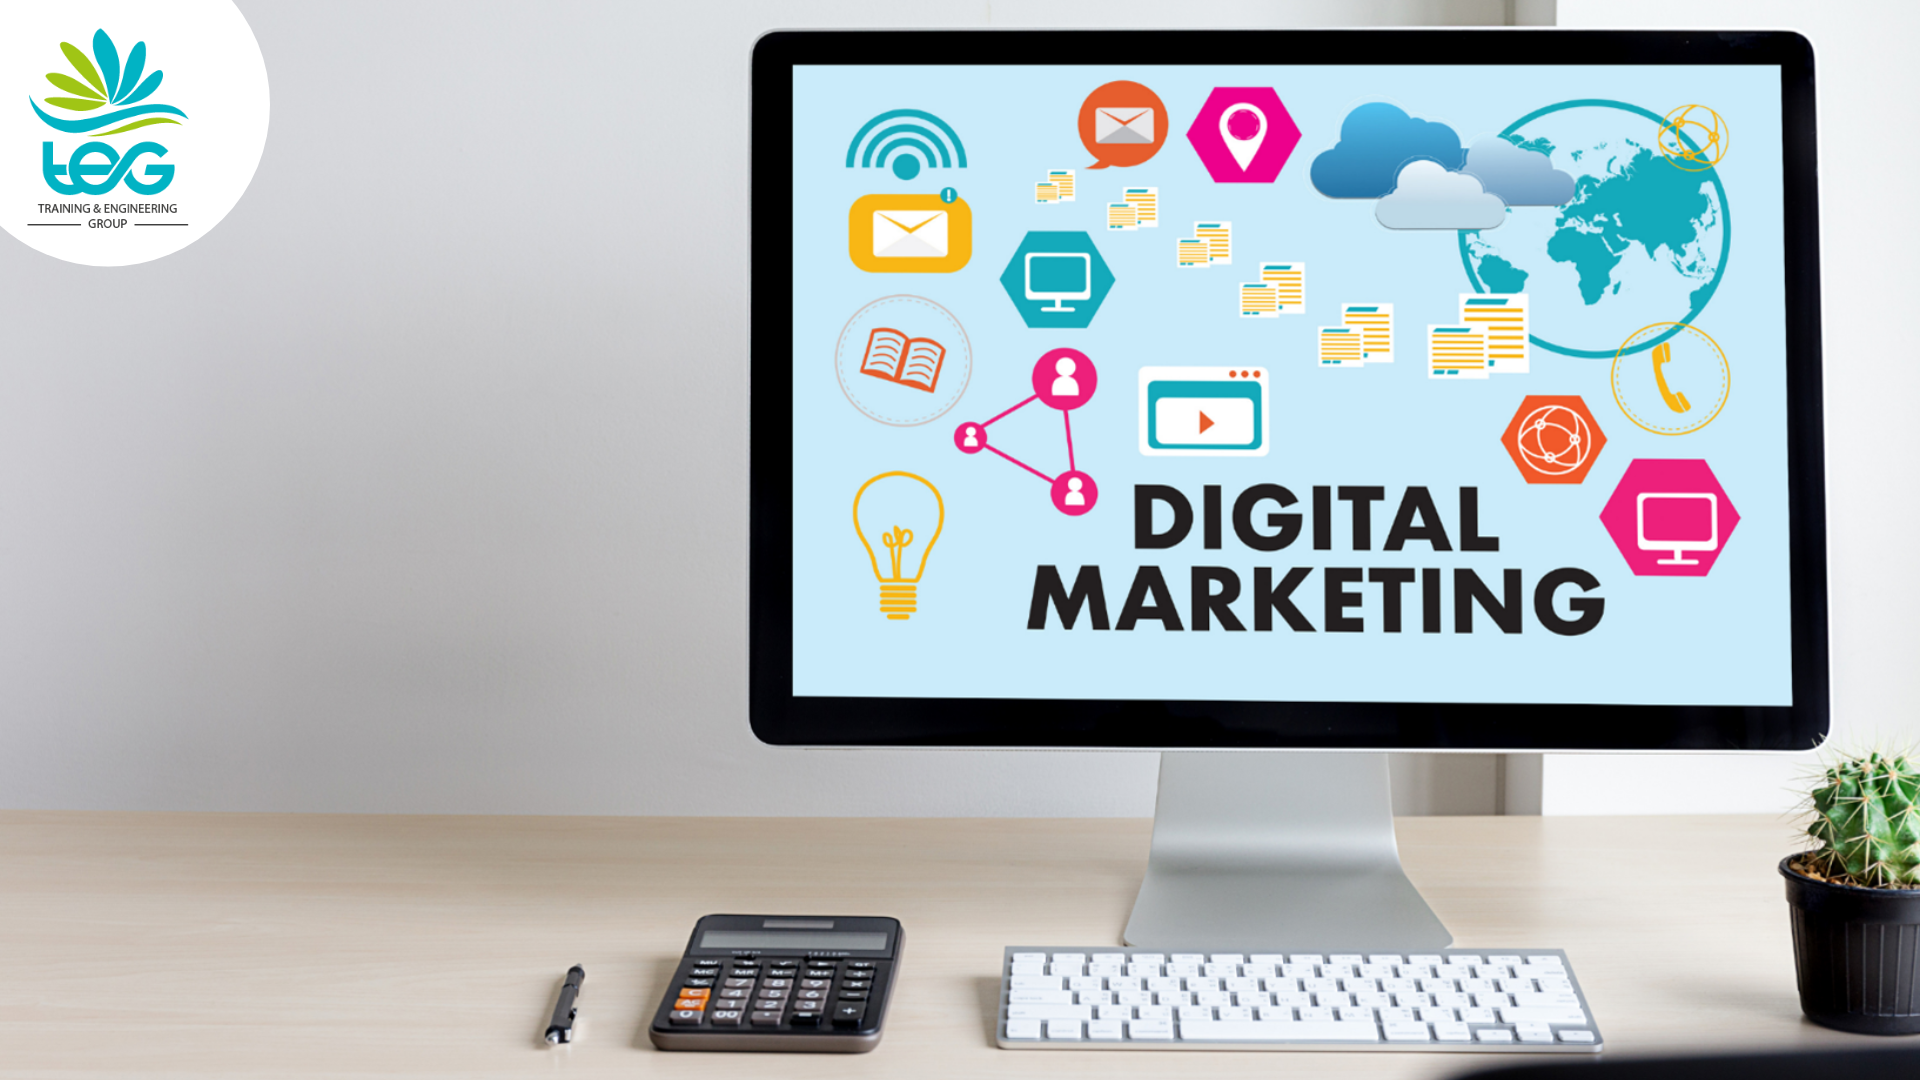 Pack formation marketing digital et multimédia